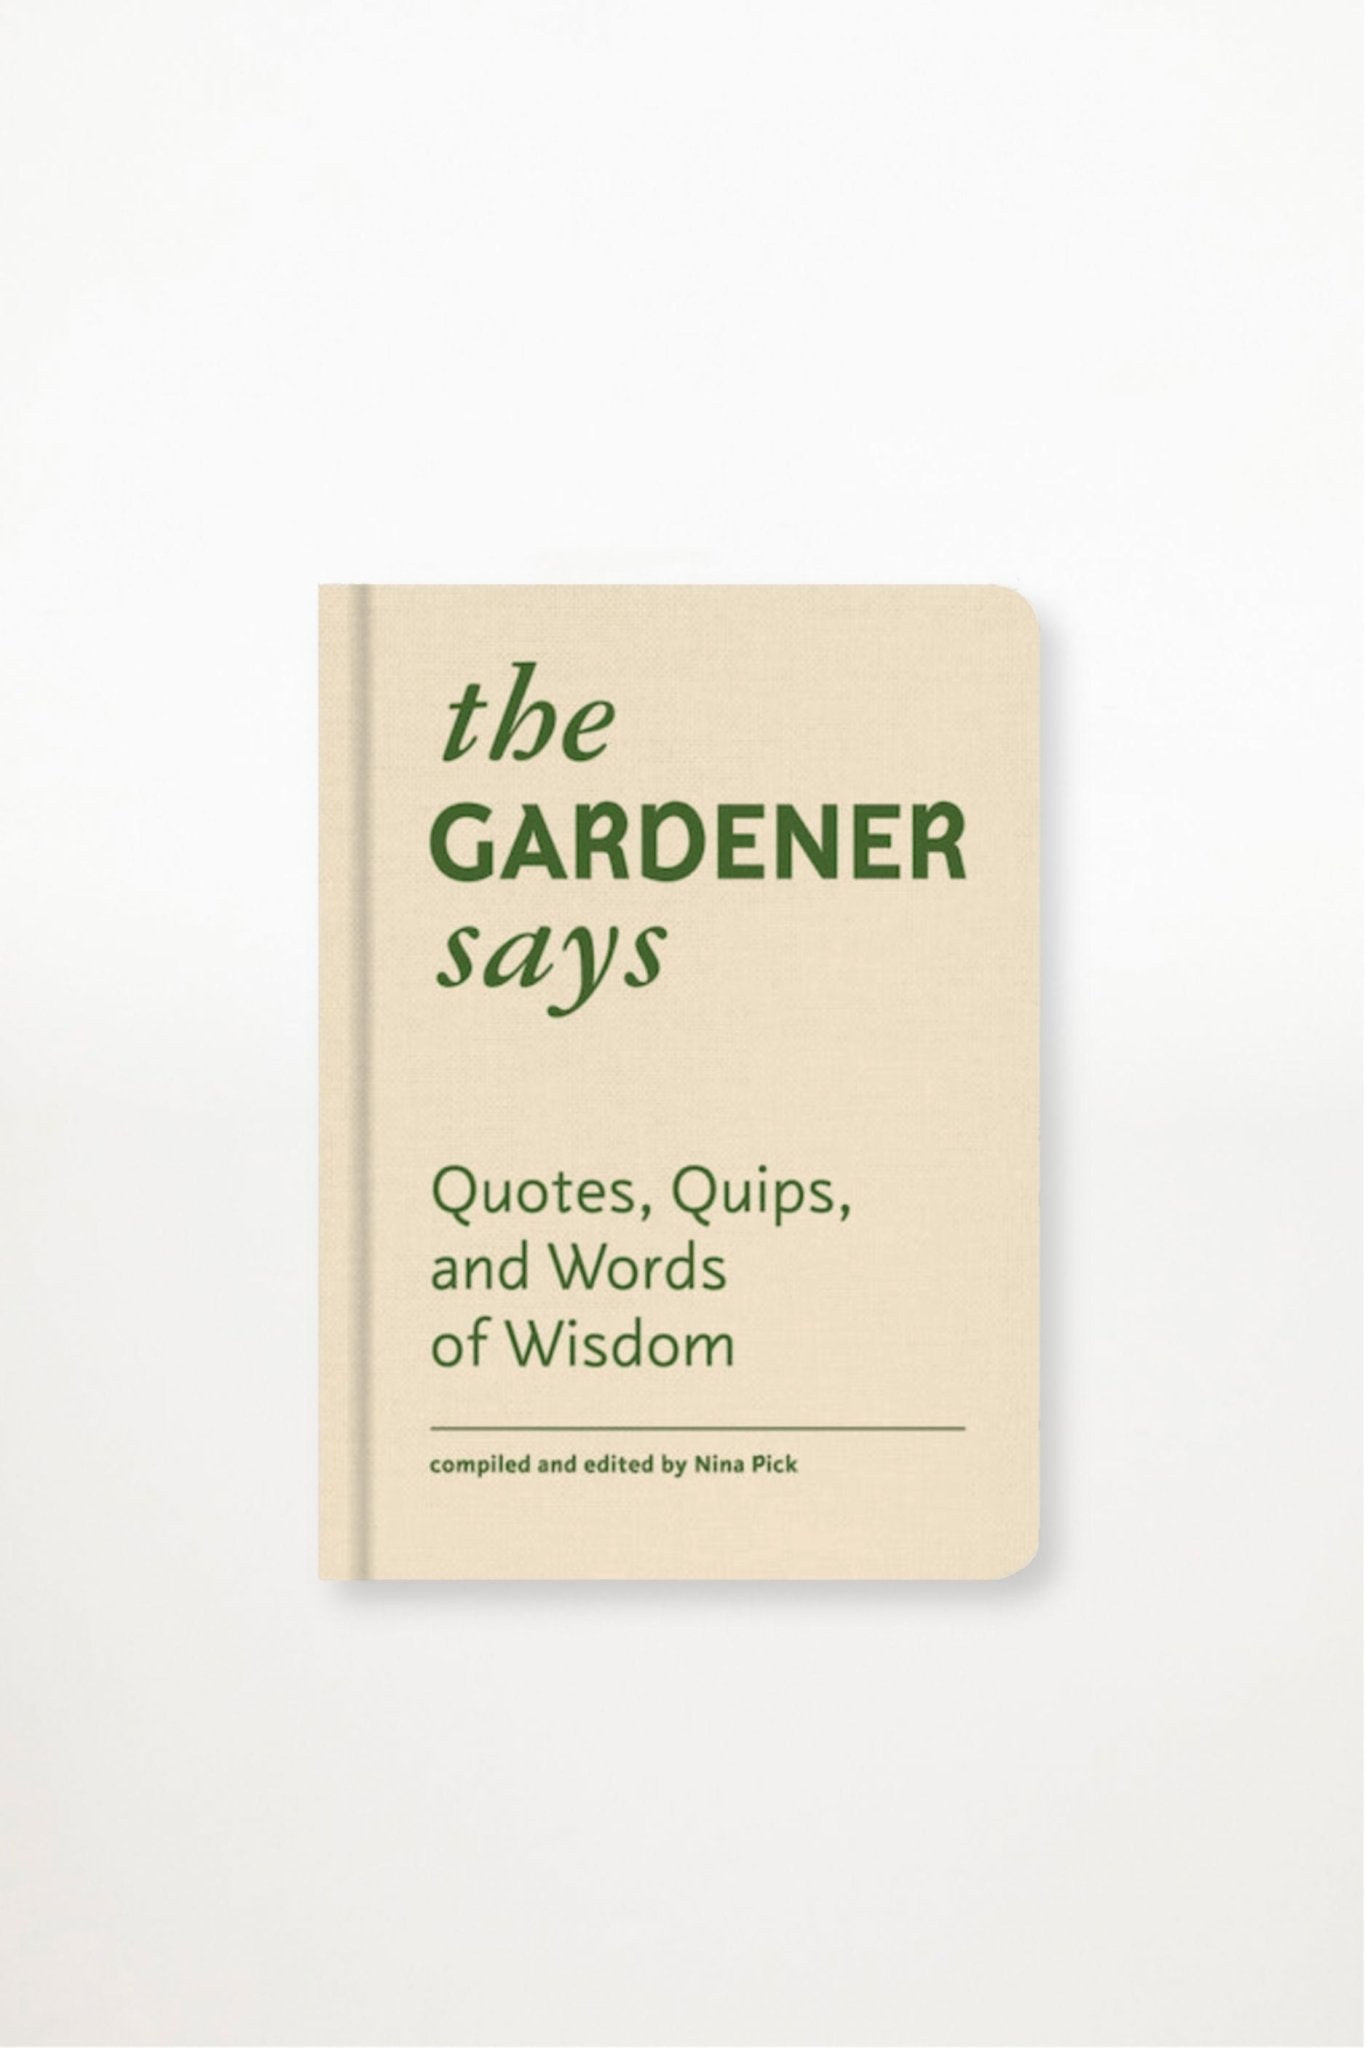 The Gardener Says - Ensemble Studios